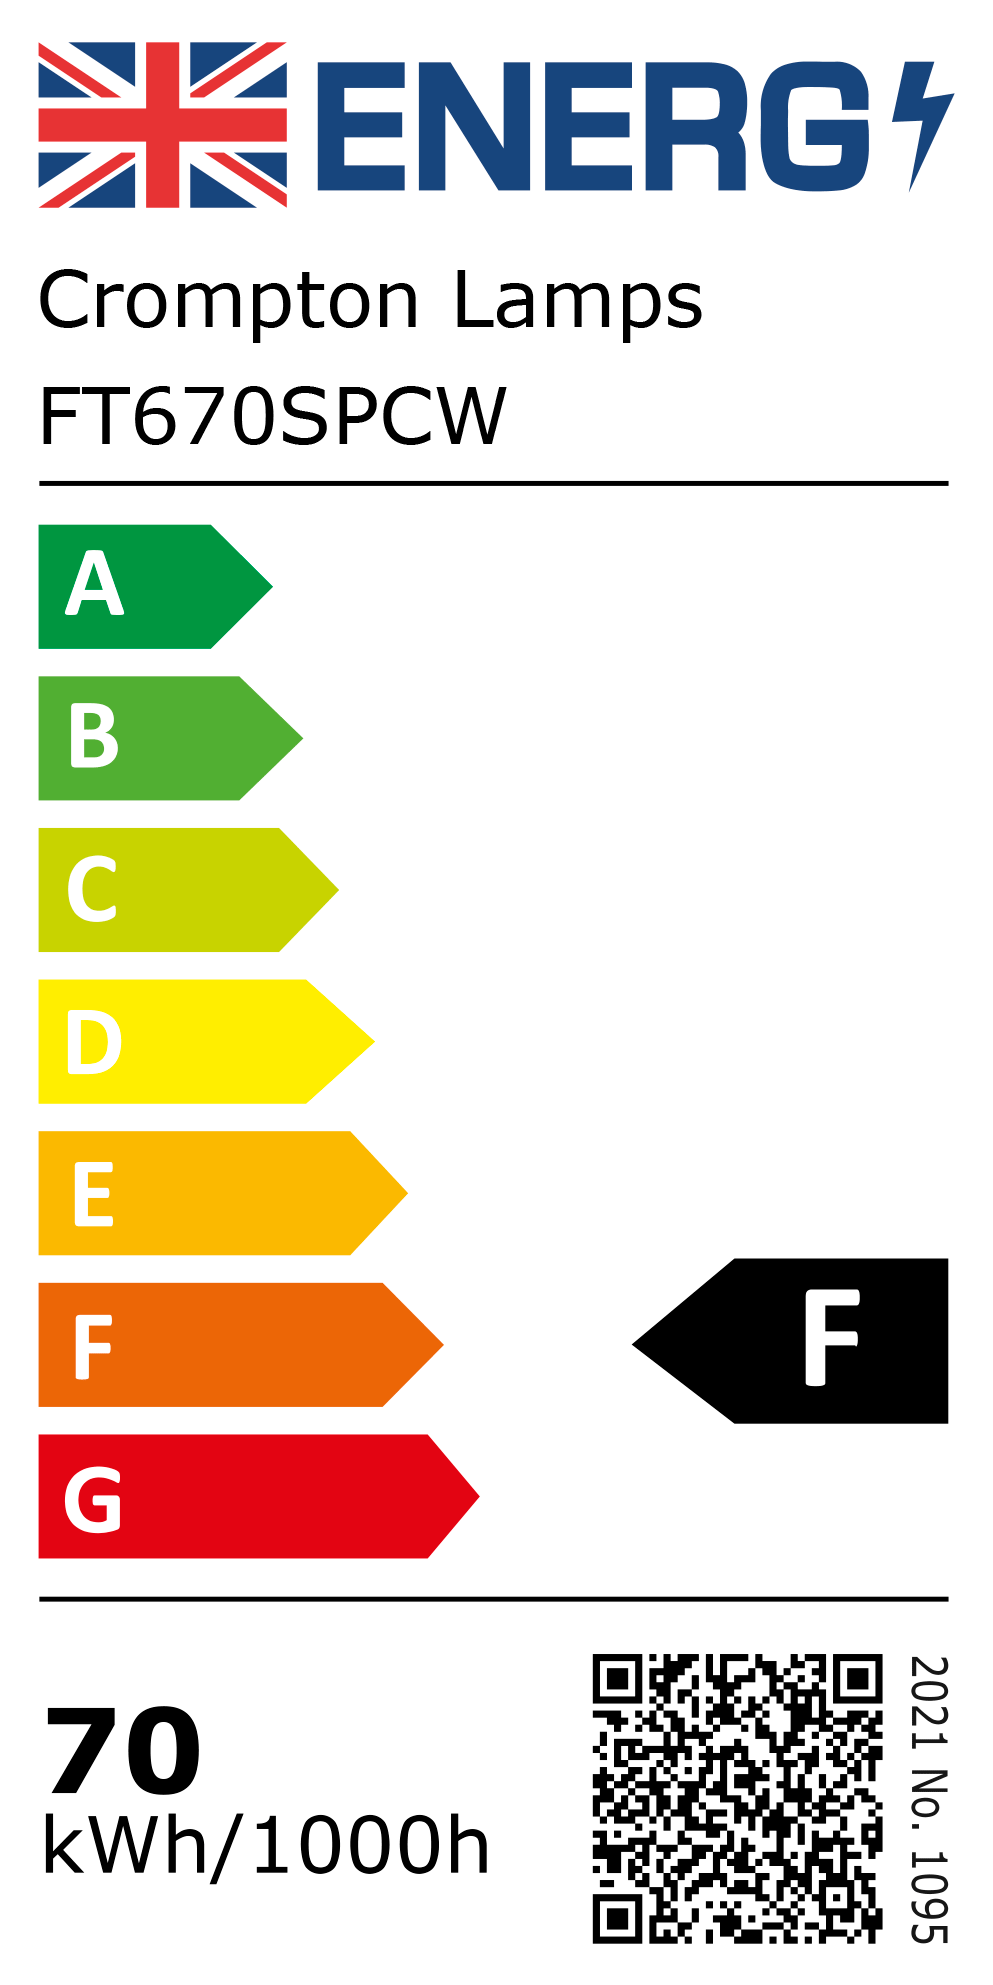 New 2021 Energy Rating Label: Stock Code FT670SPCW